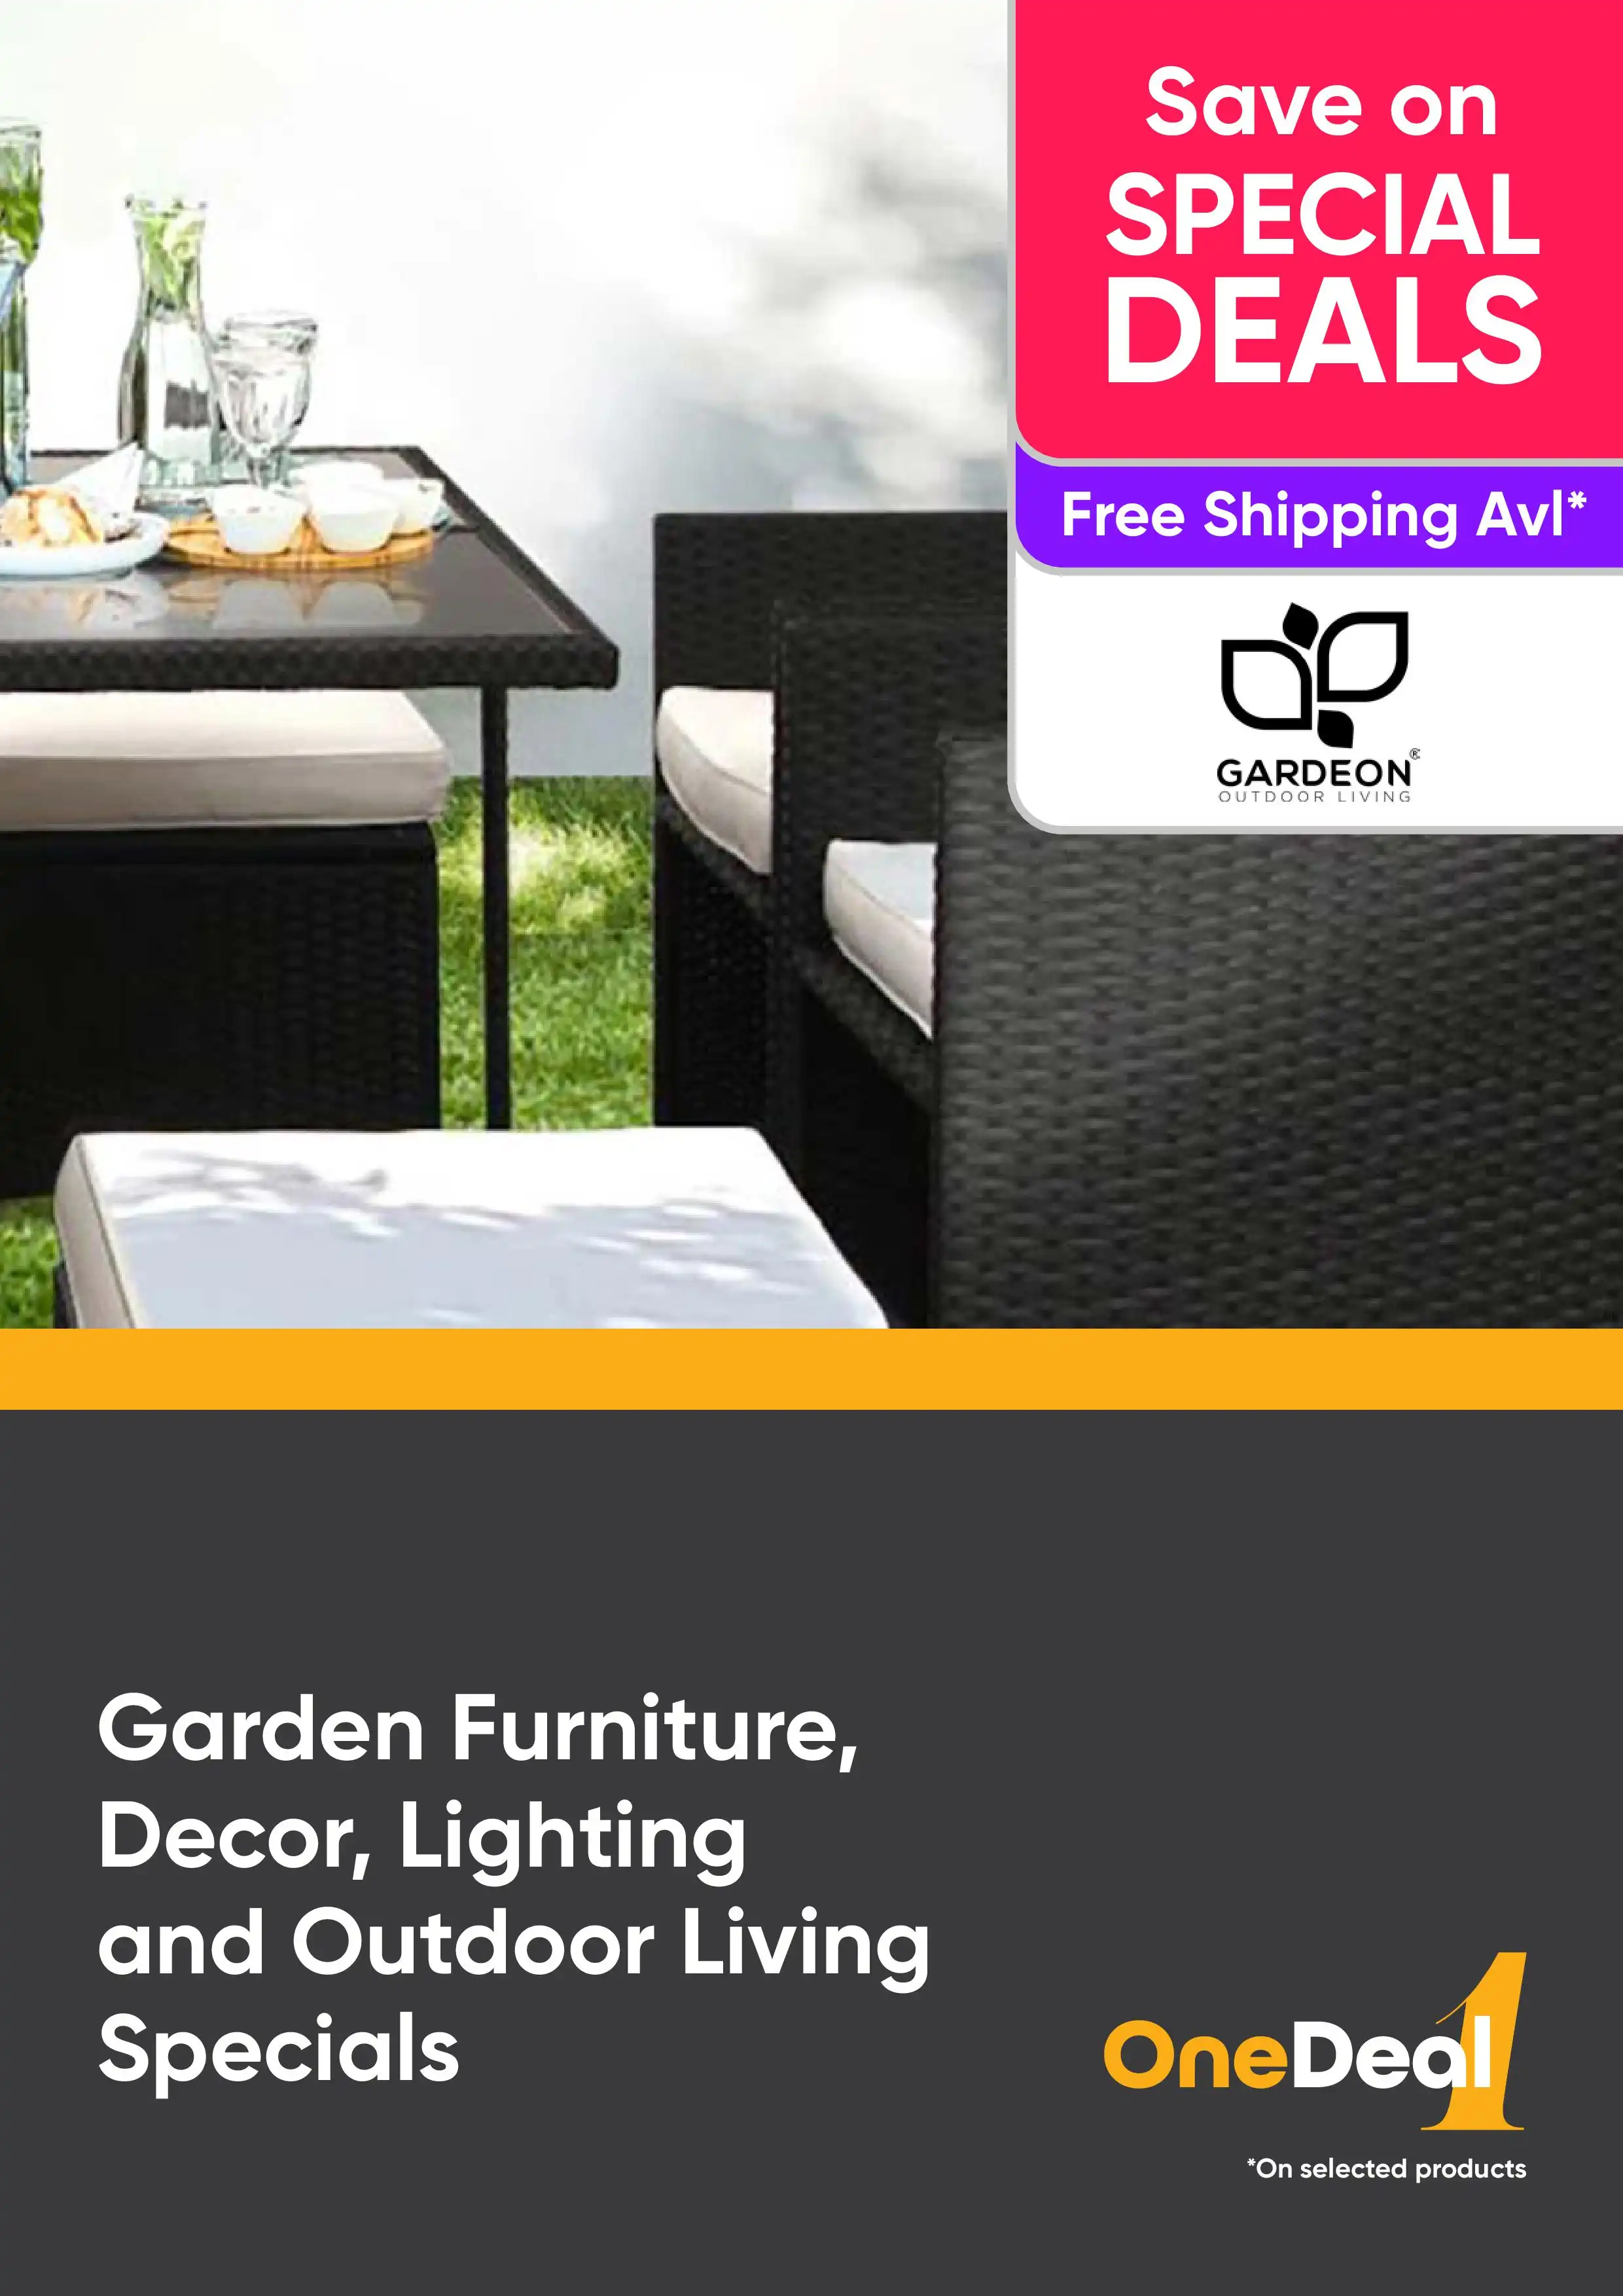 Garden Furniture, Decor, Lighting and Outdoor Living Specials